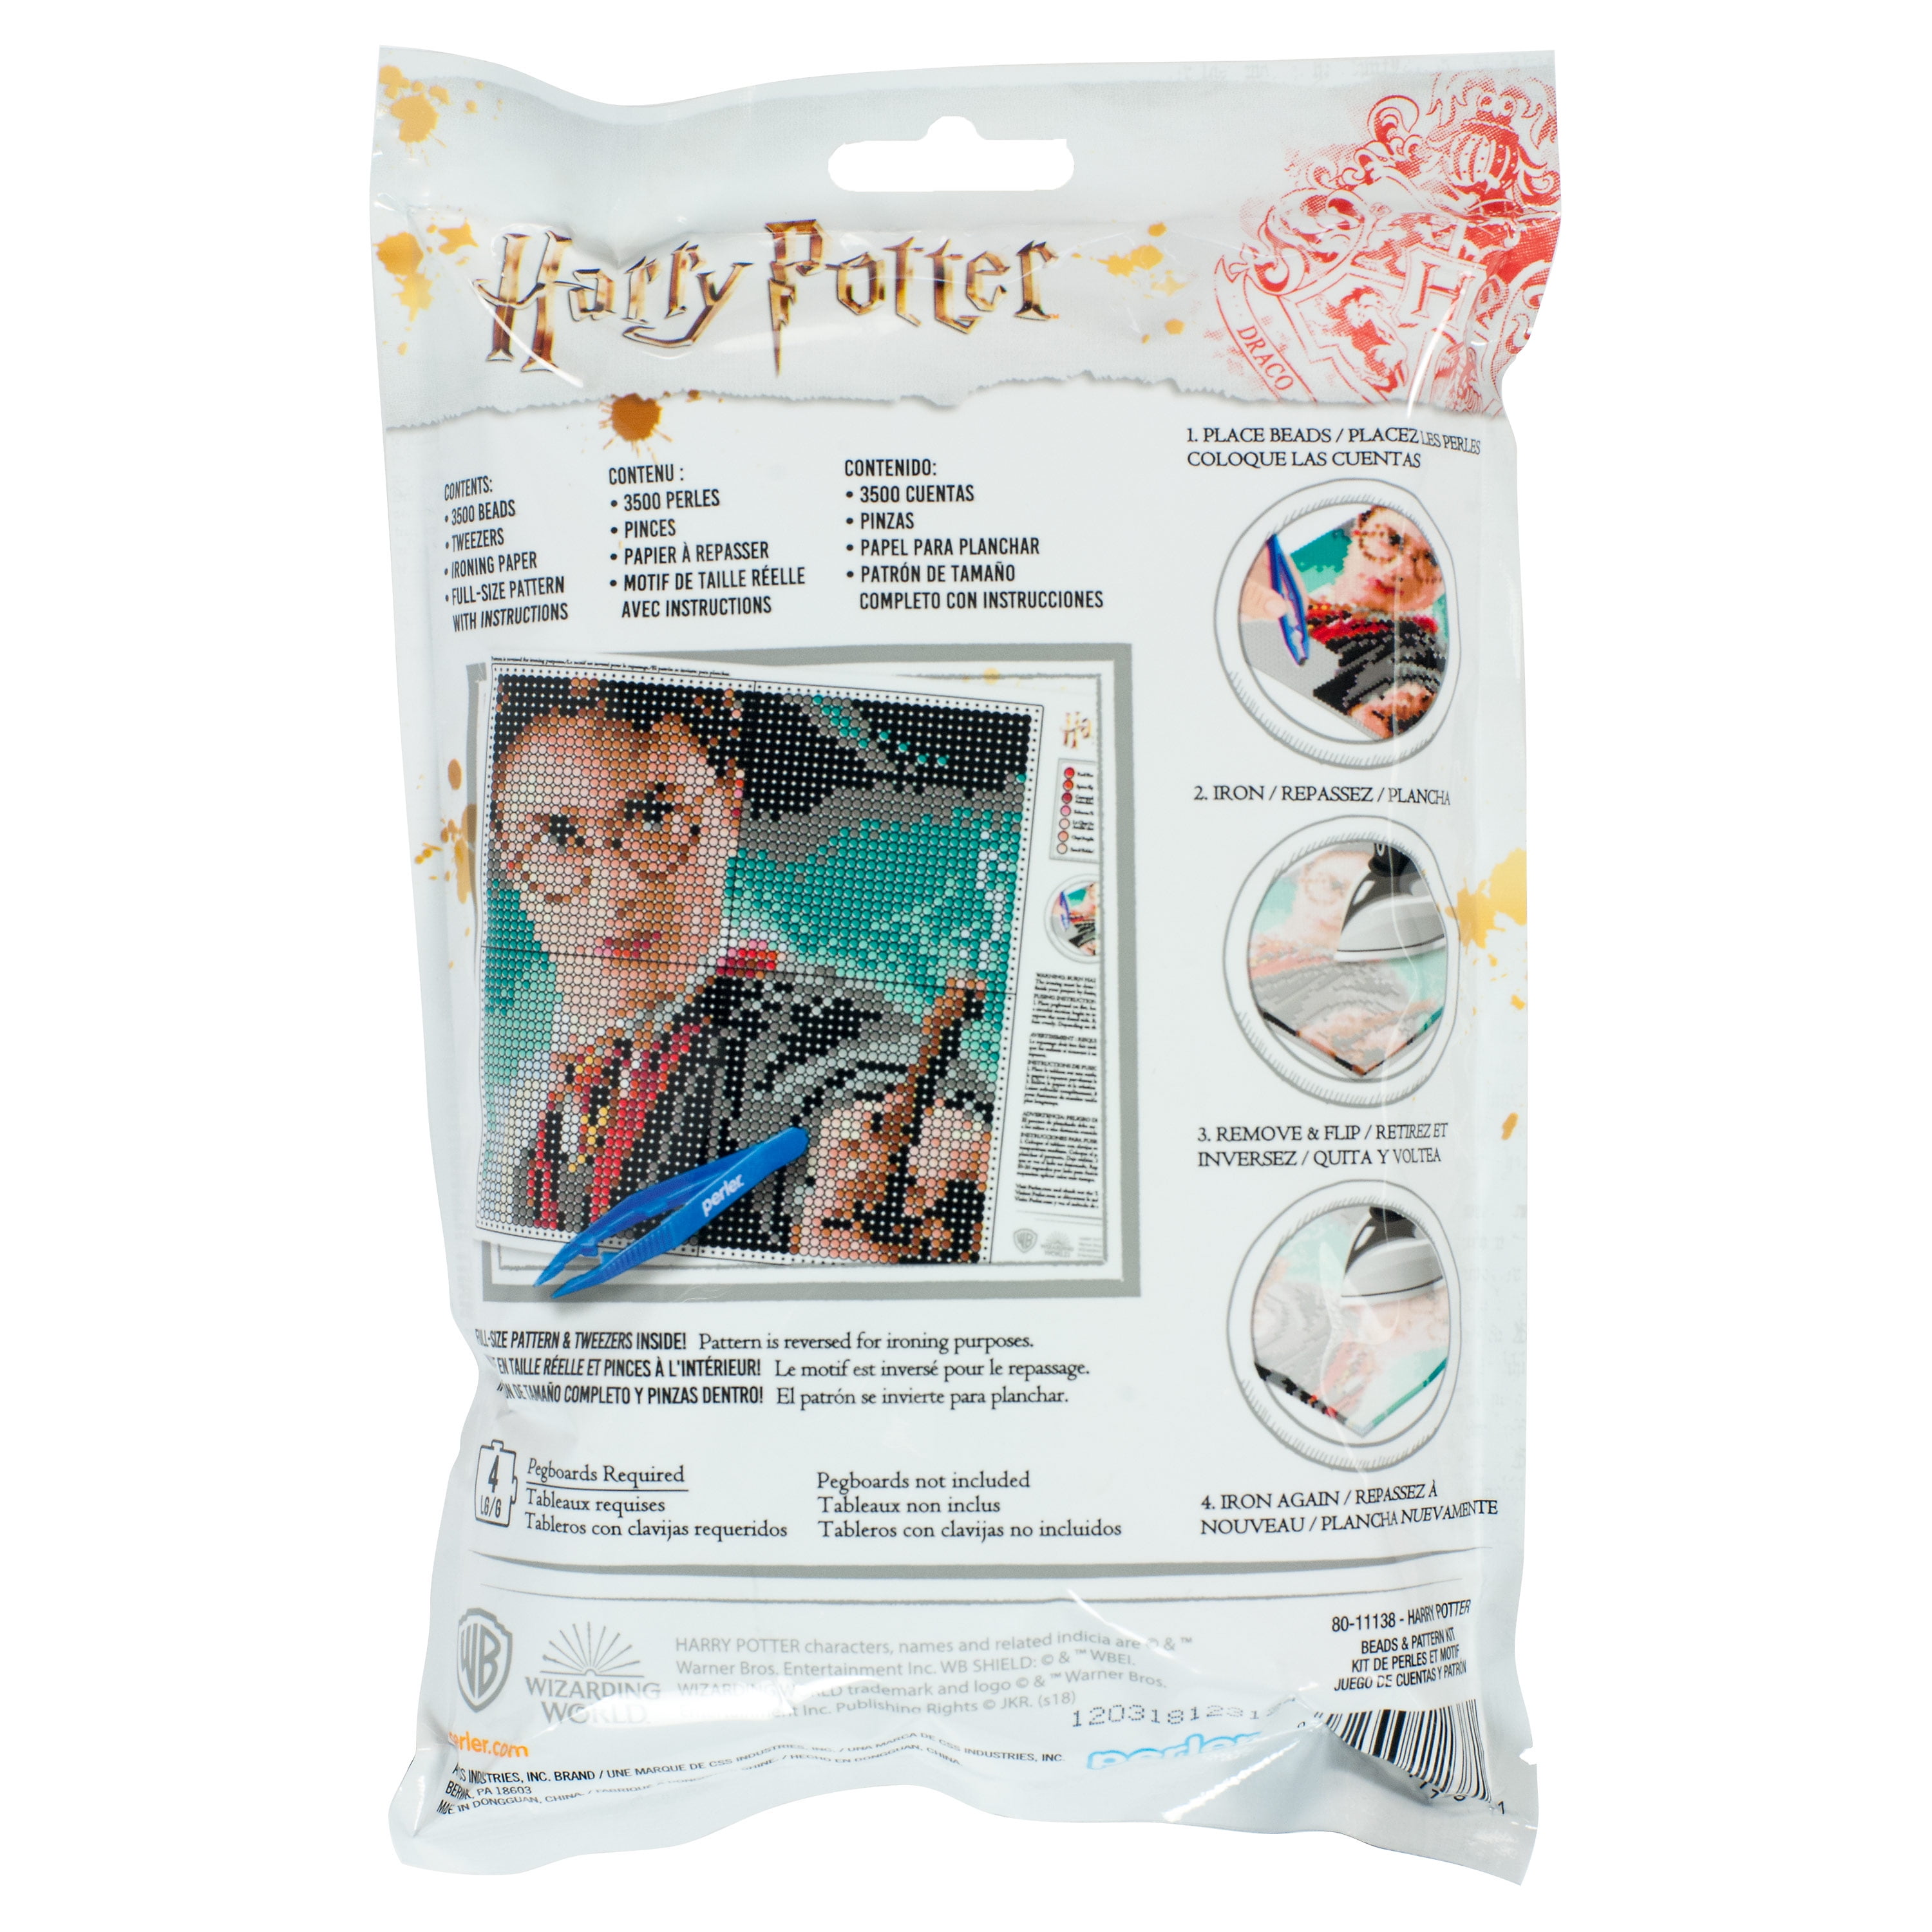 Perler Harry Potter Fuse Bead Kit Only $12.90 on